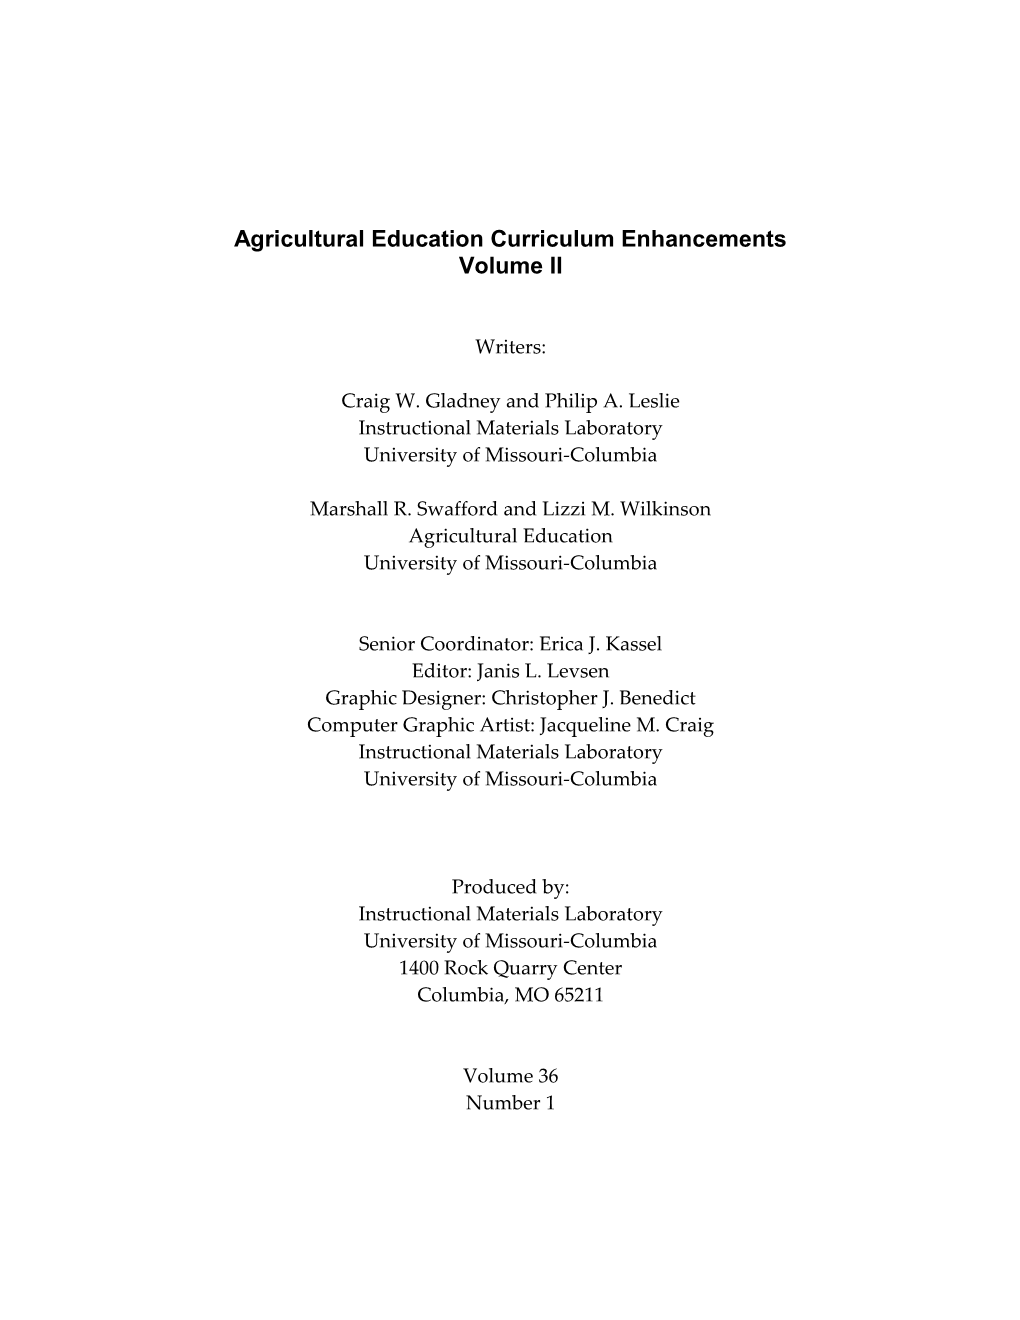 Agriculture Education Curriculum Enhancements I